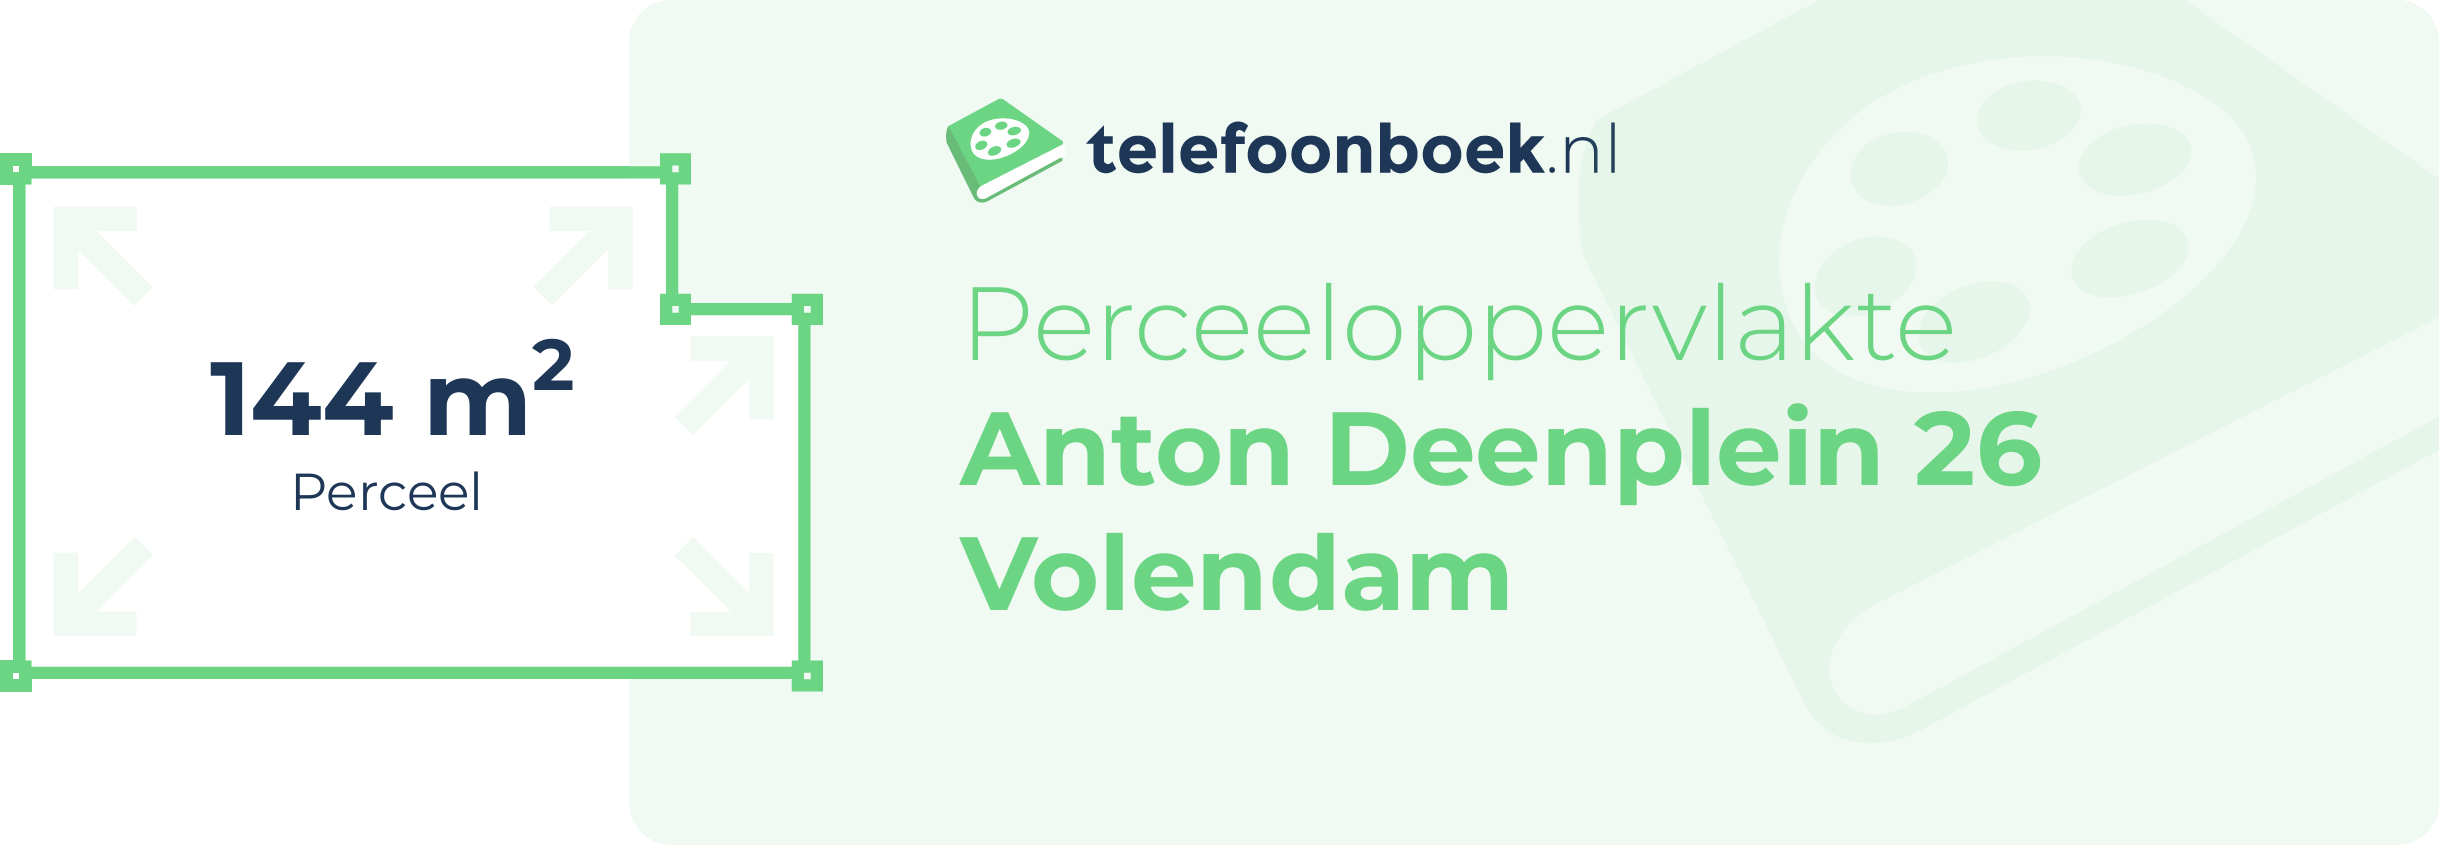 Perceeloppervlakte Anton Deenplein 26 Volendam